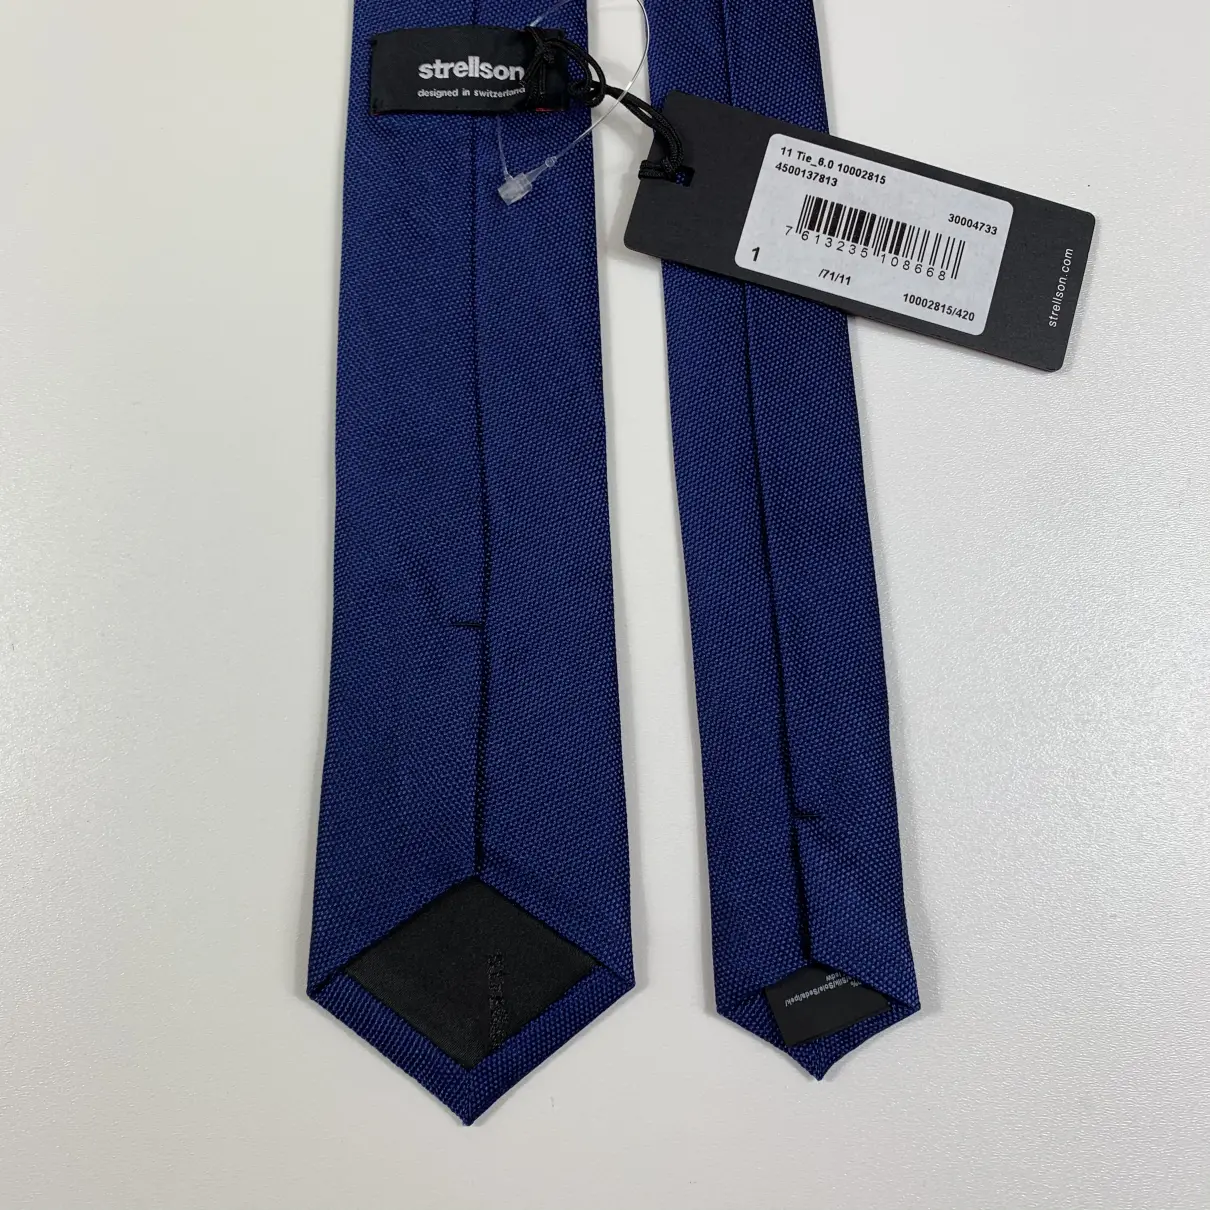 Buy Strellson Silk tie online